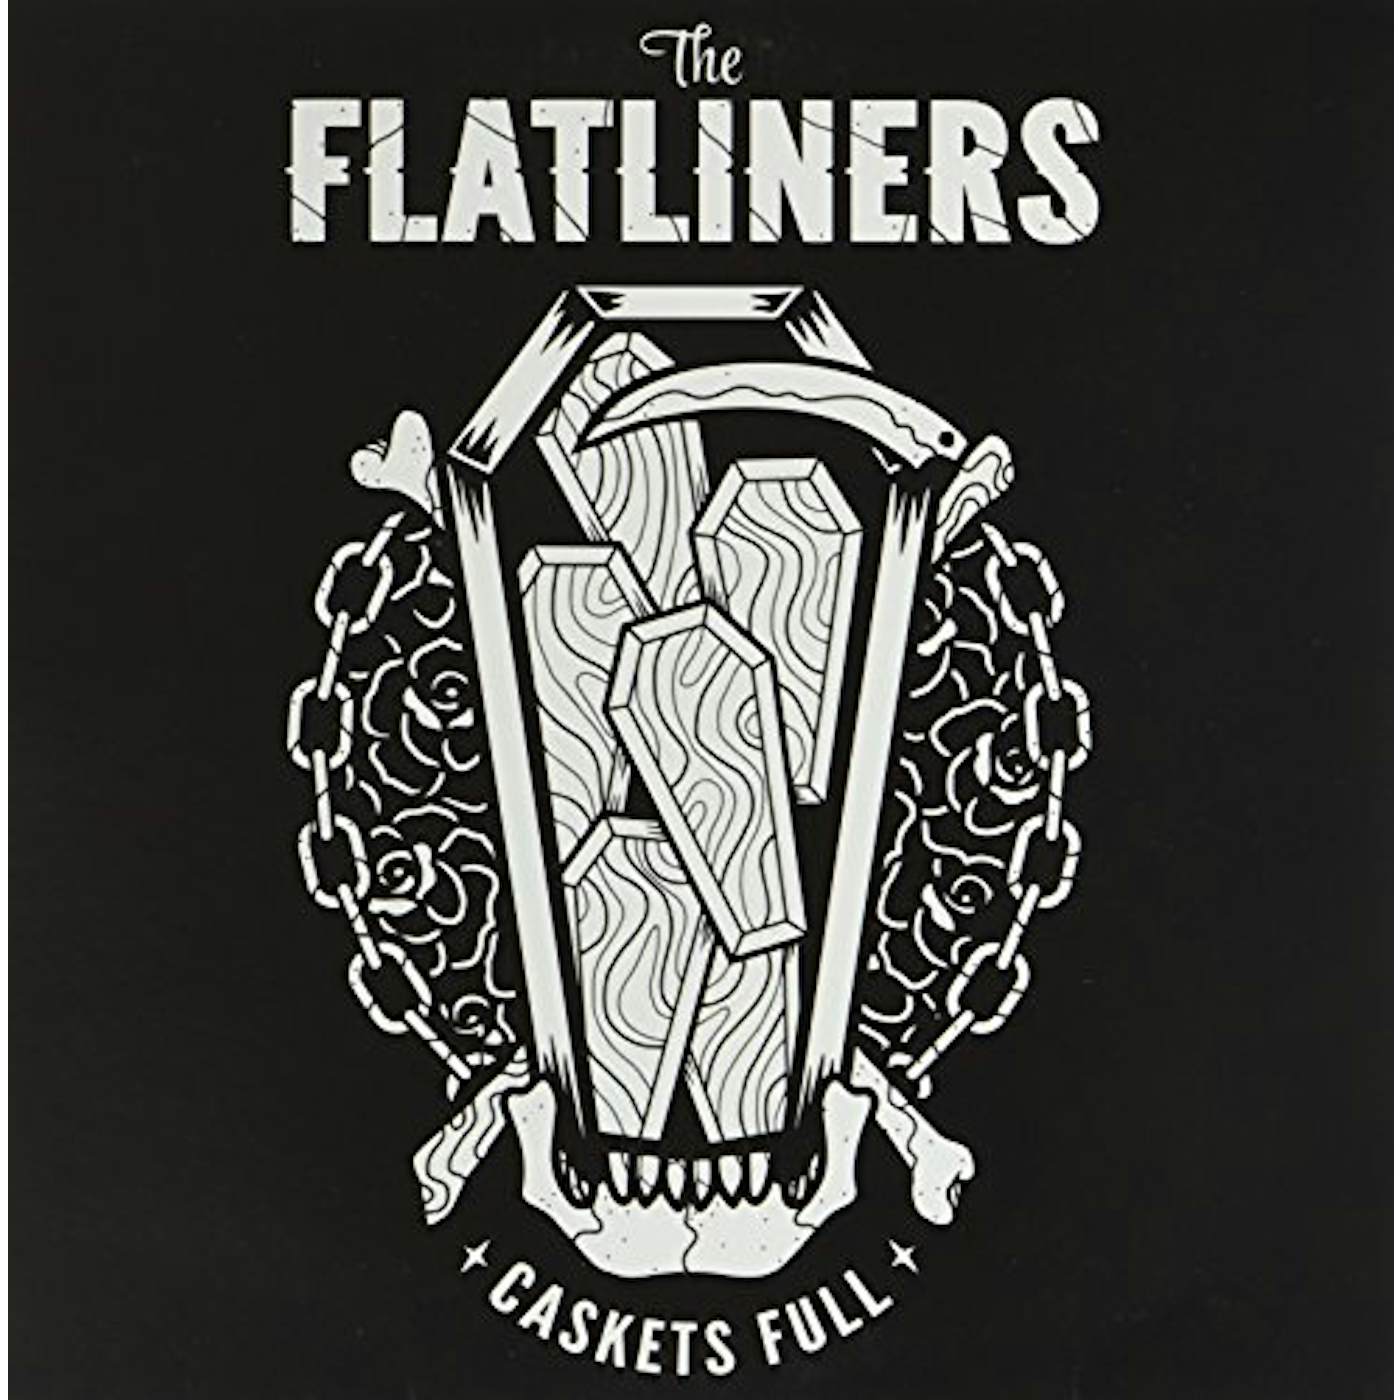 The Flatliners Caskets Full Vinyl Record